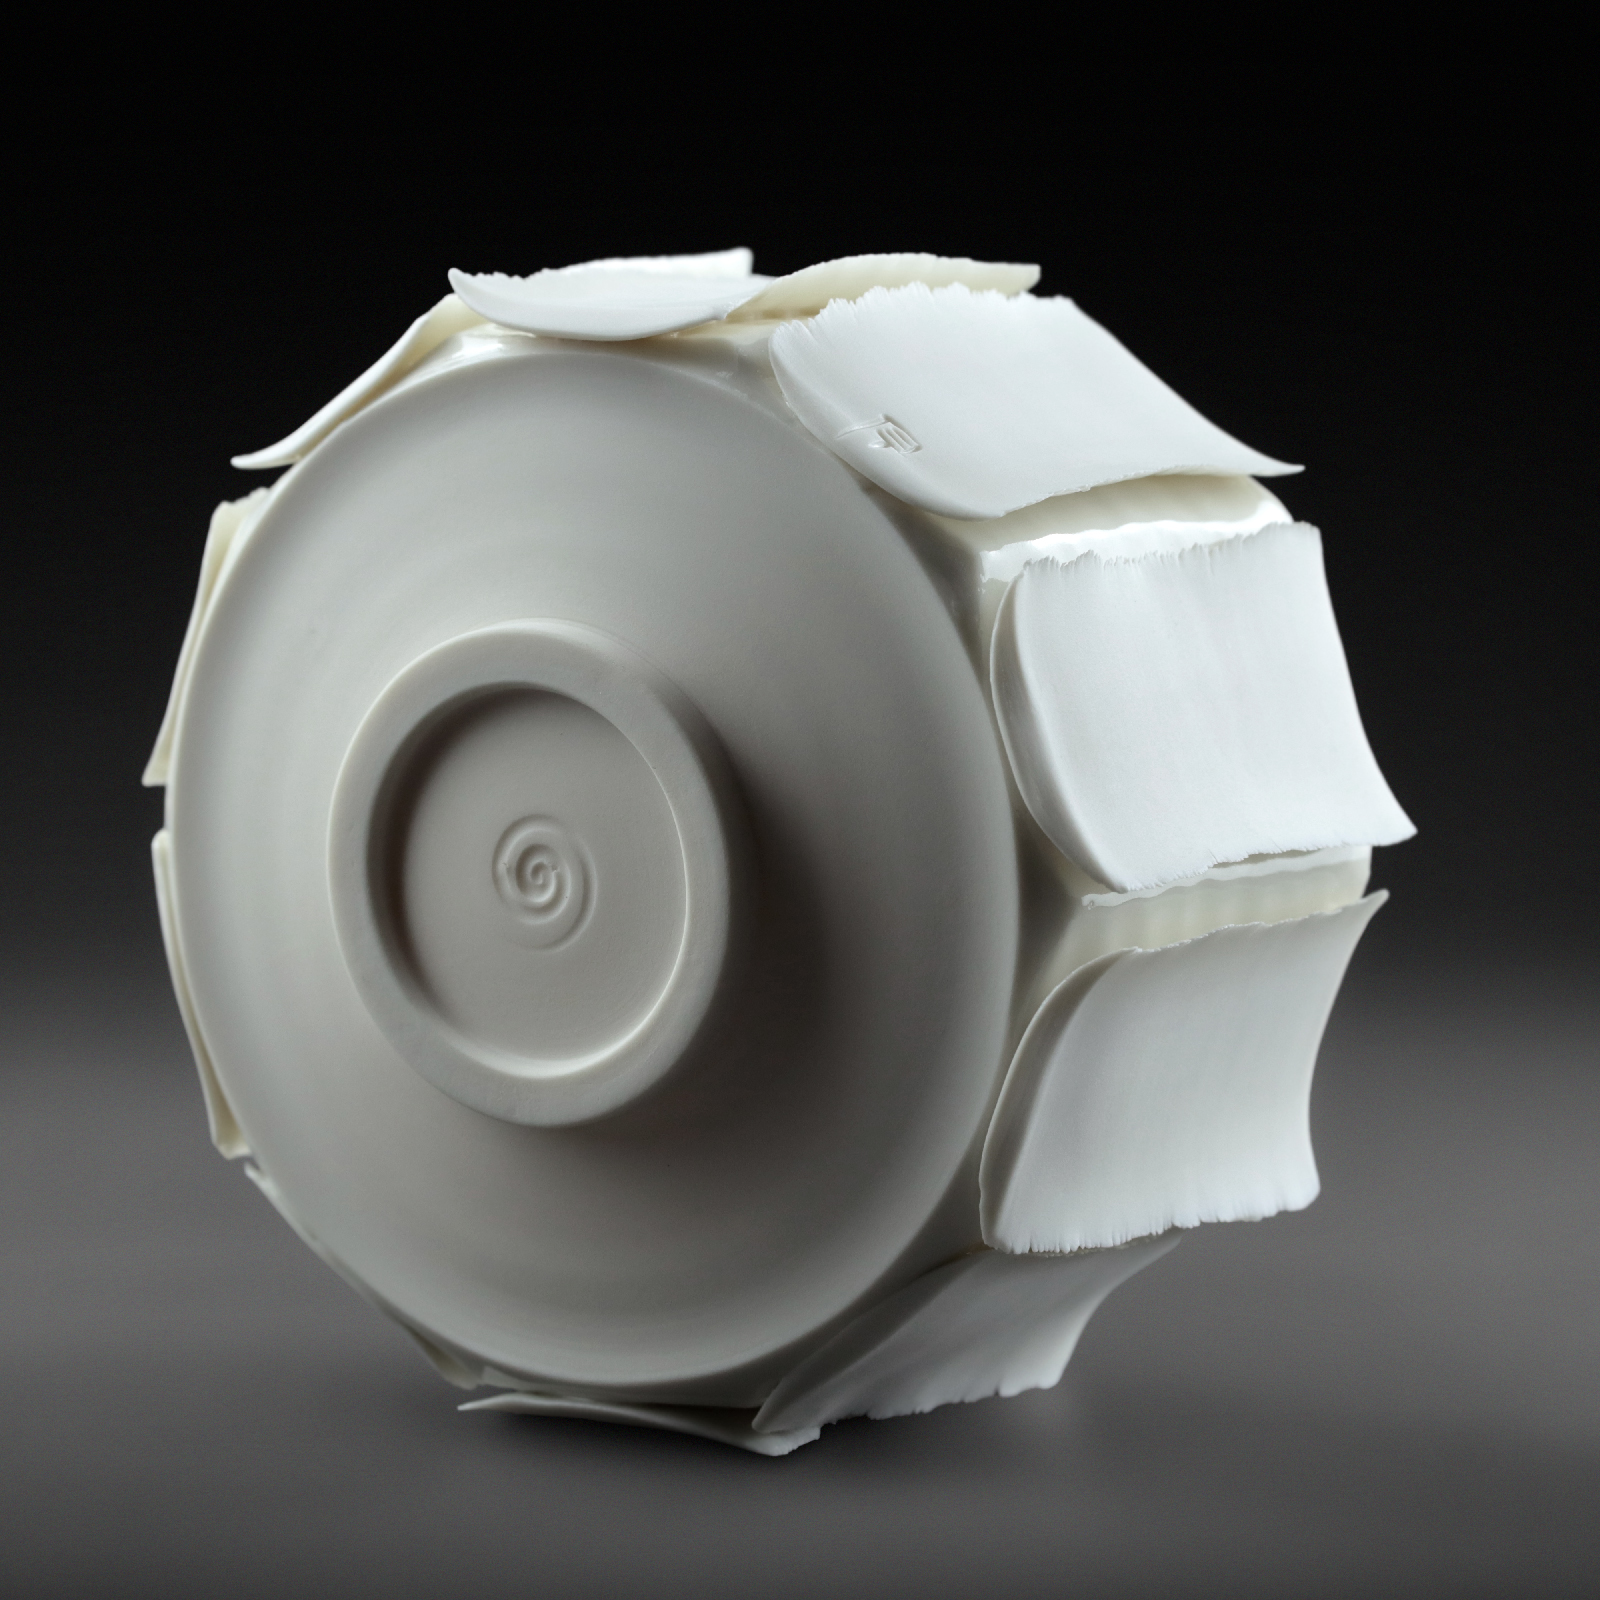 Large laminated porcelain bowl - Eric Faure